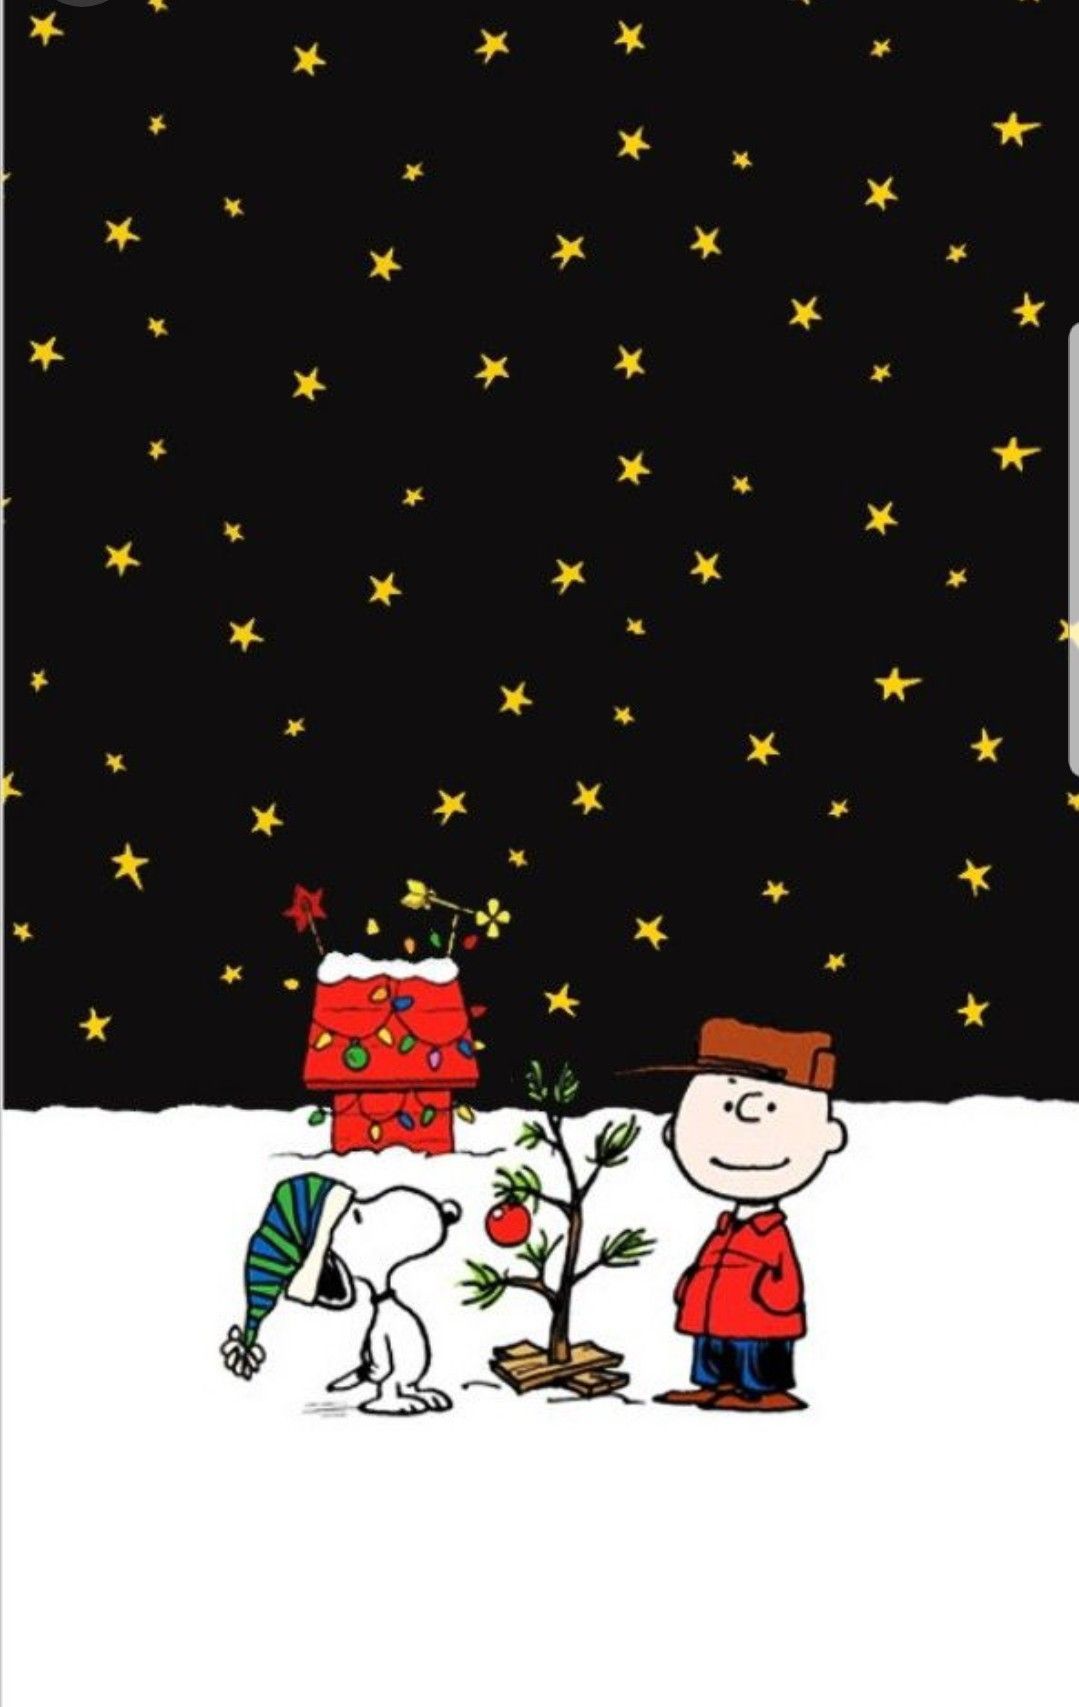 Charlie Brown Christmas. Snoopy wallpaper, Christmas phone wallpaper, Wallpaper iphone christmas